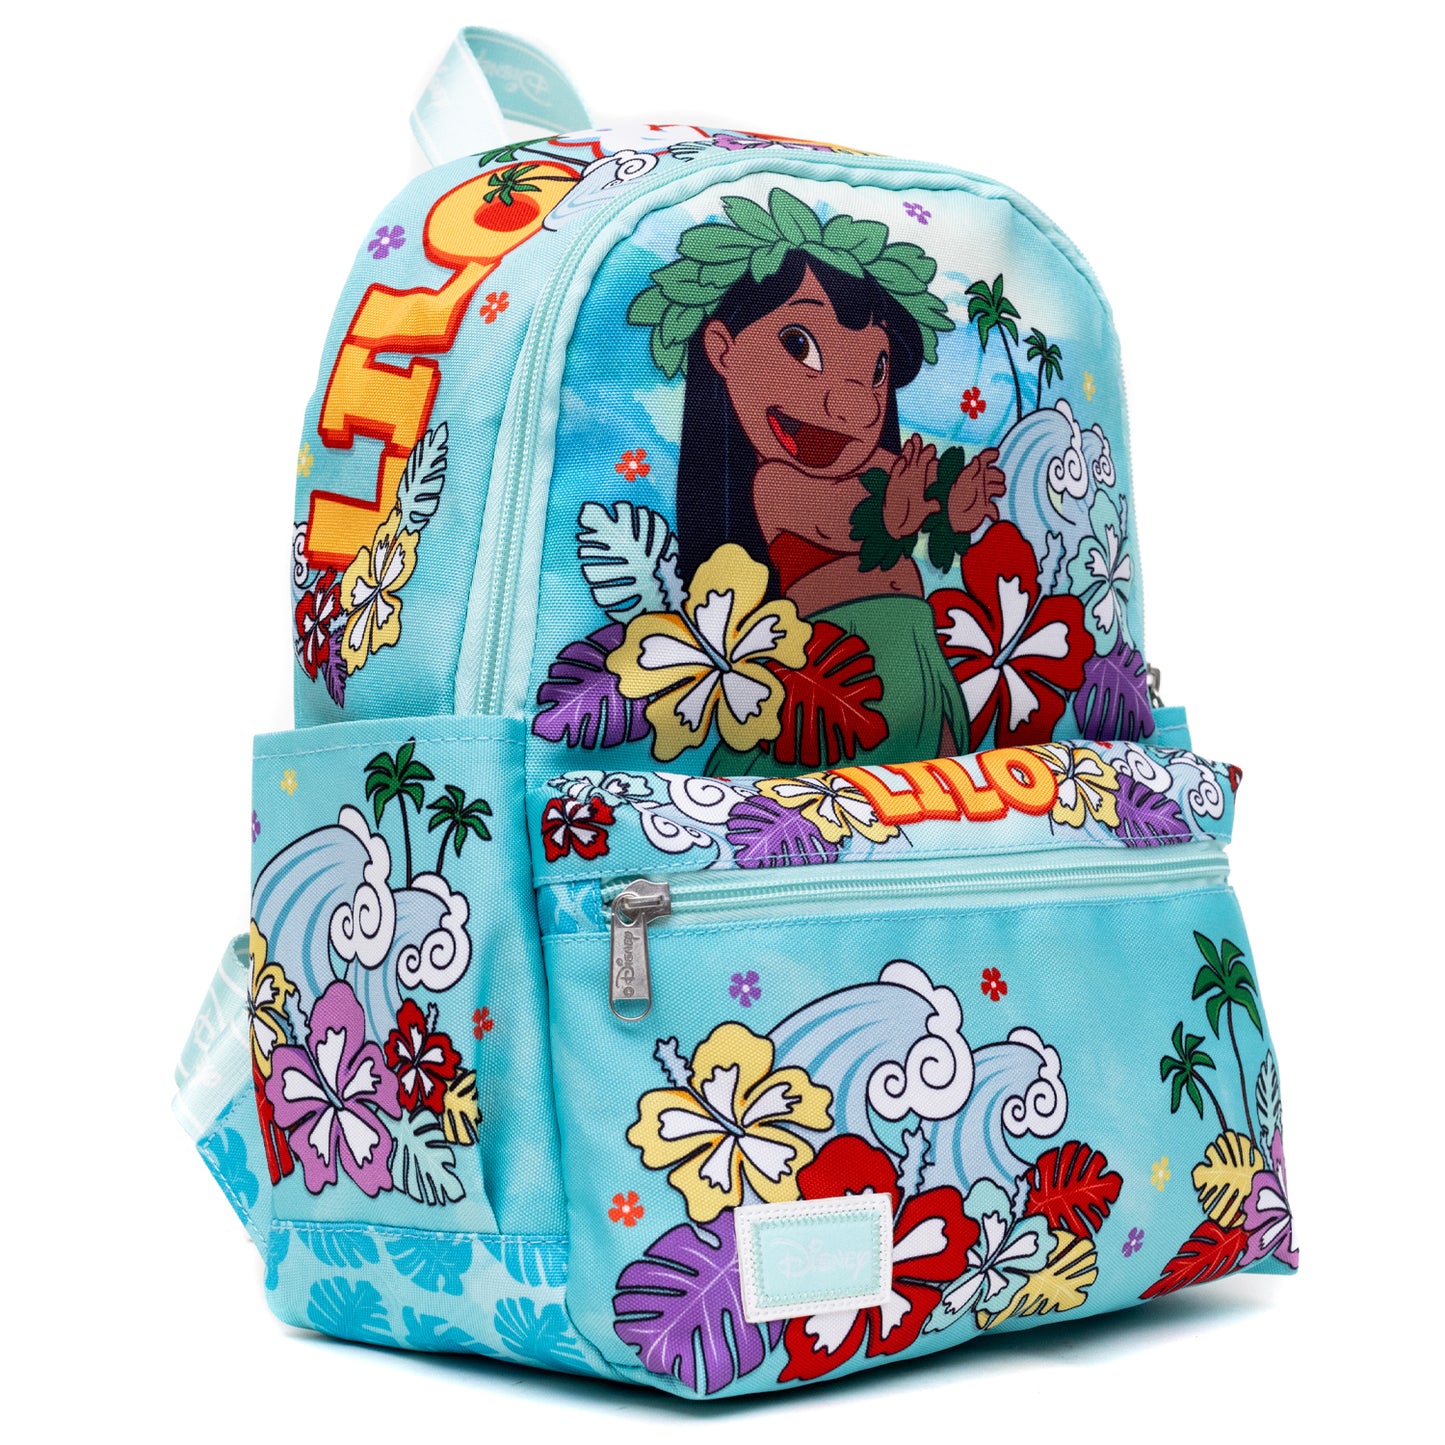 WondaPOP - Disney Lilo & Stitch - Lilo Pelekai Junior Nylon (13 inch) Mini Backpack - NEW RELEASE